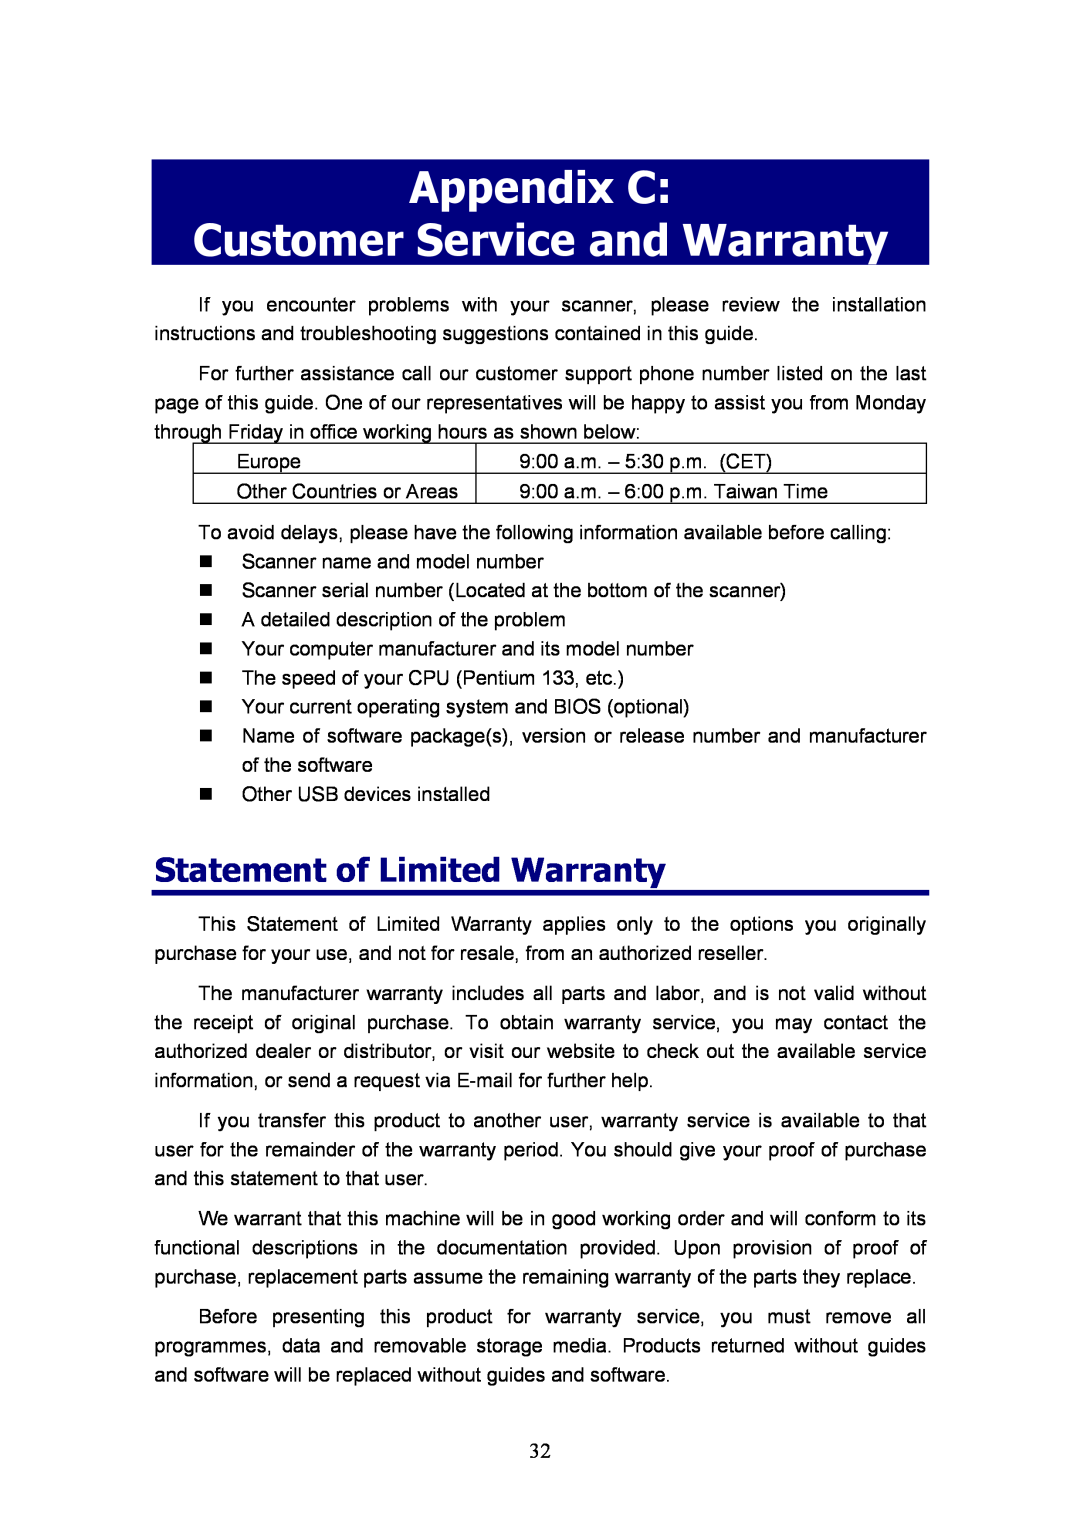 Plustek D600, MobileOffice Scanner manual Appendix C Customer Service and Warranty, Statement of Limited Warranty 